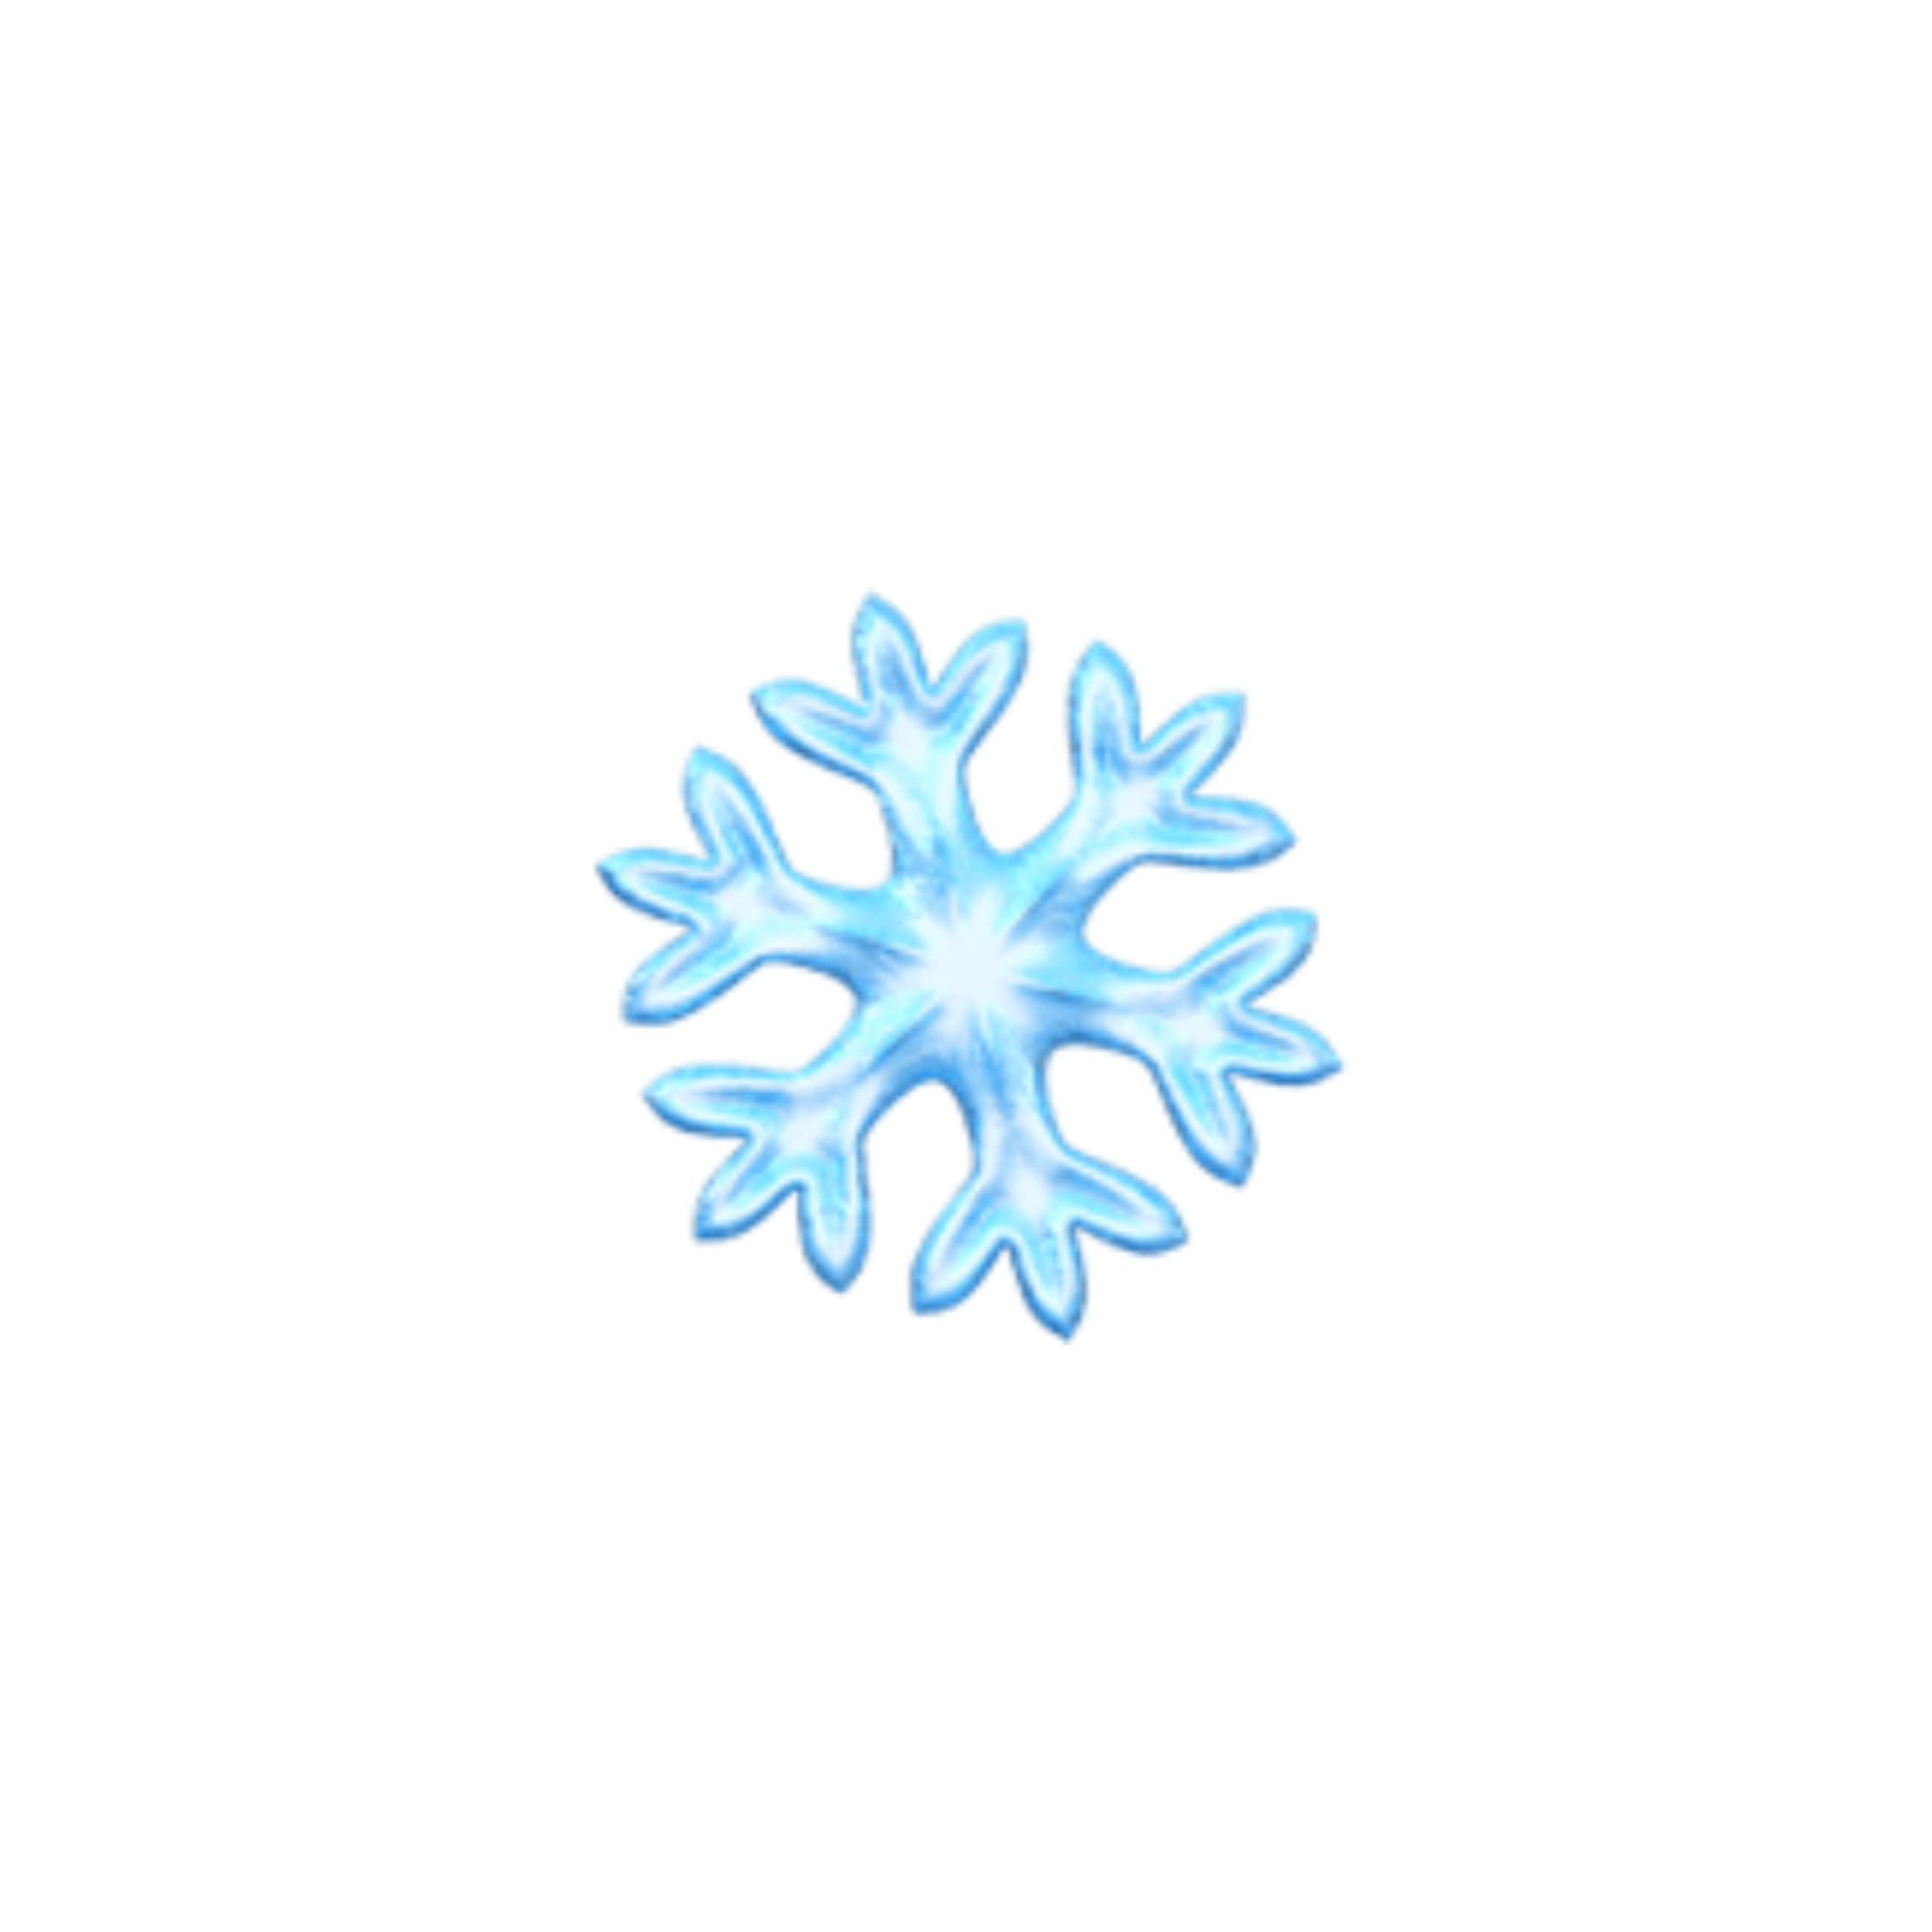 Snowflake emoji. ЭМОДЖИ Снежинка. Снежинка эмодзи айфон. Стикер Снежинка. Снежинки на прозрачном.